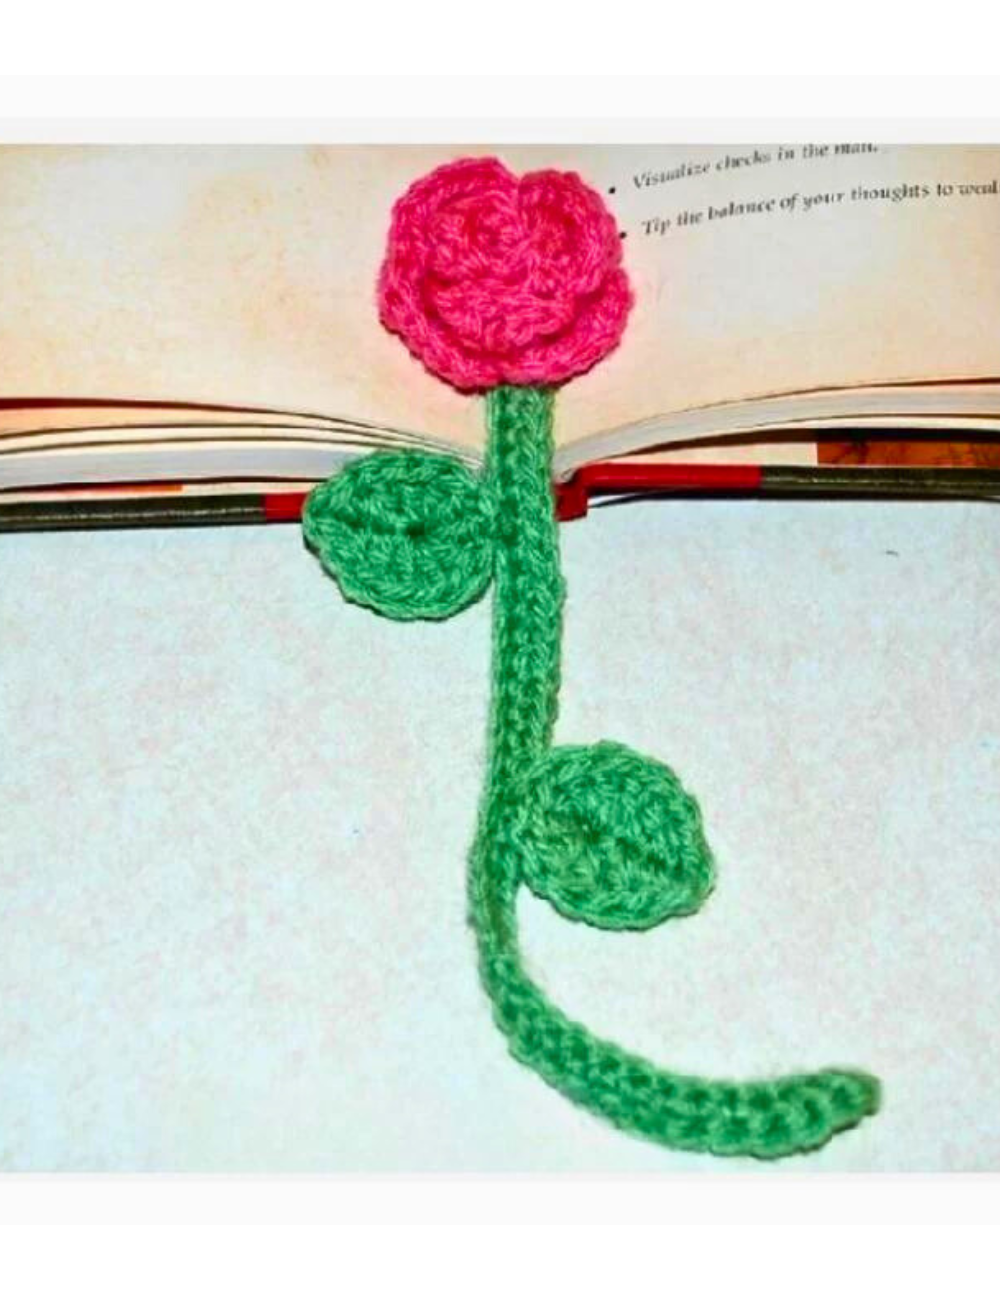 Crochet a Rose Bookmark